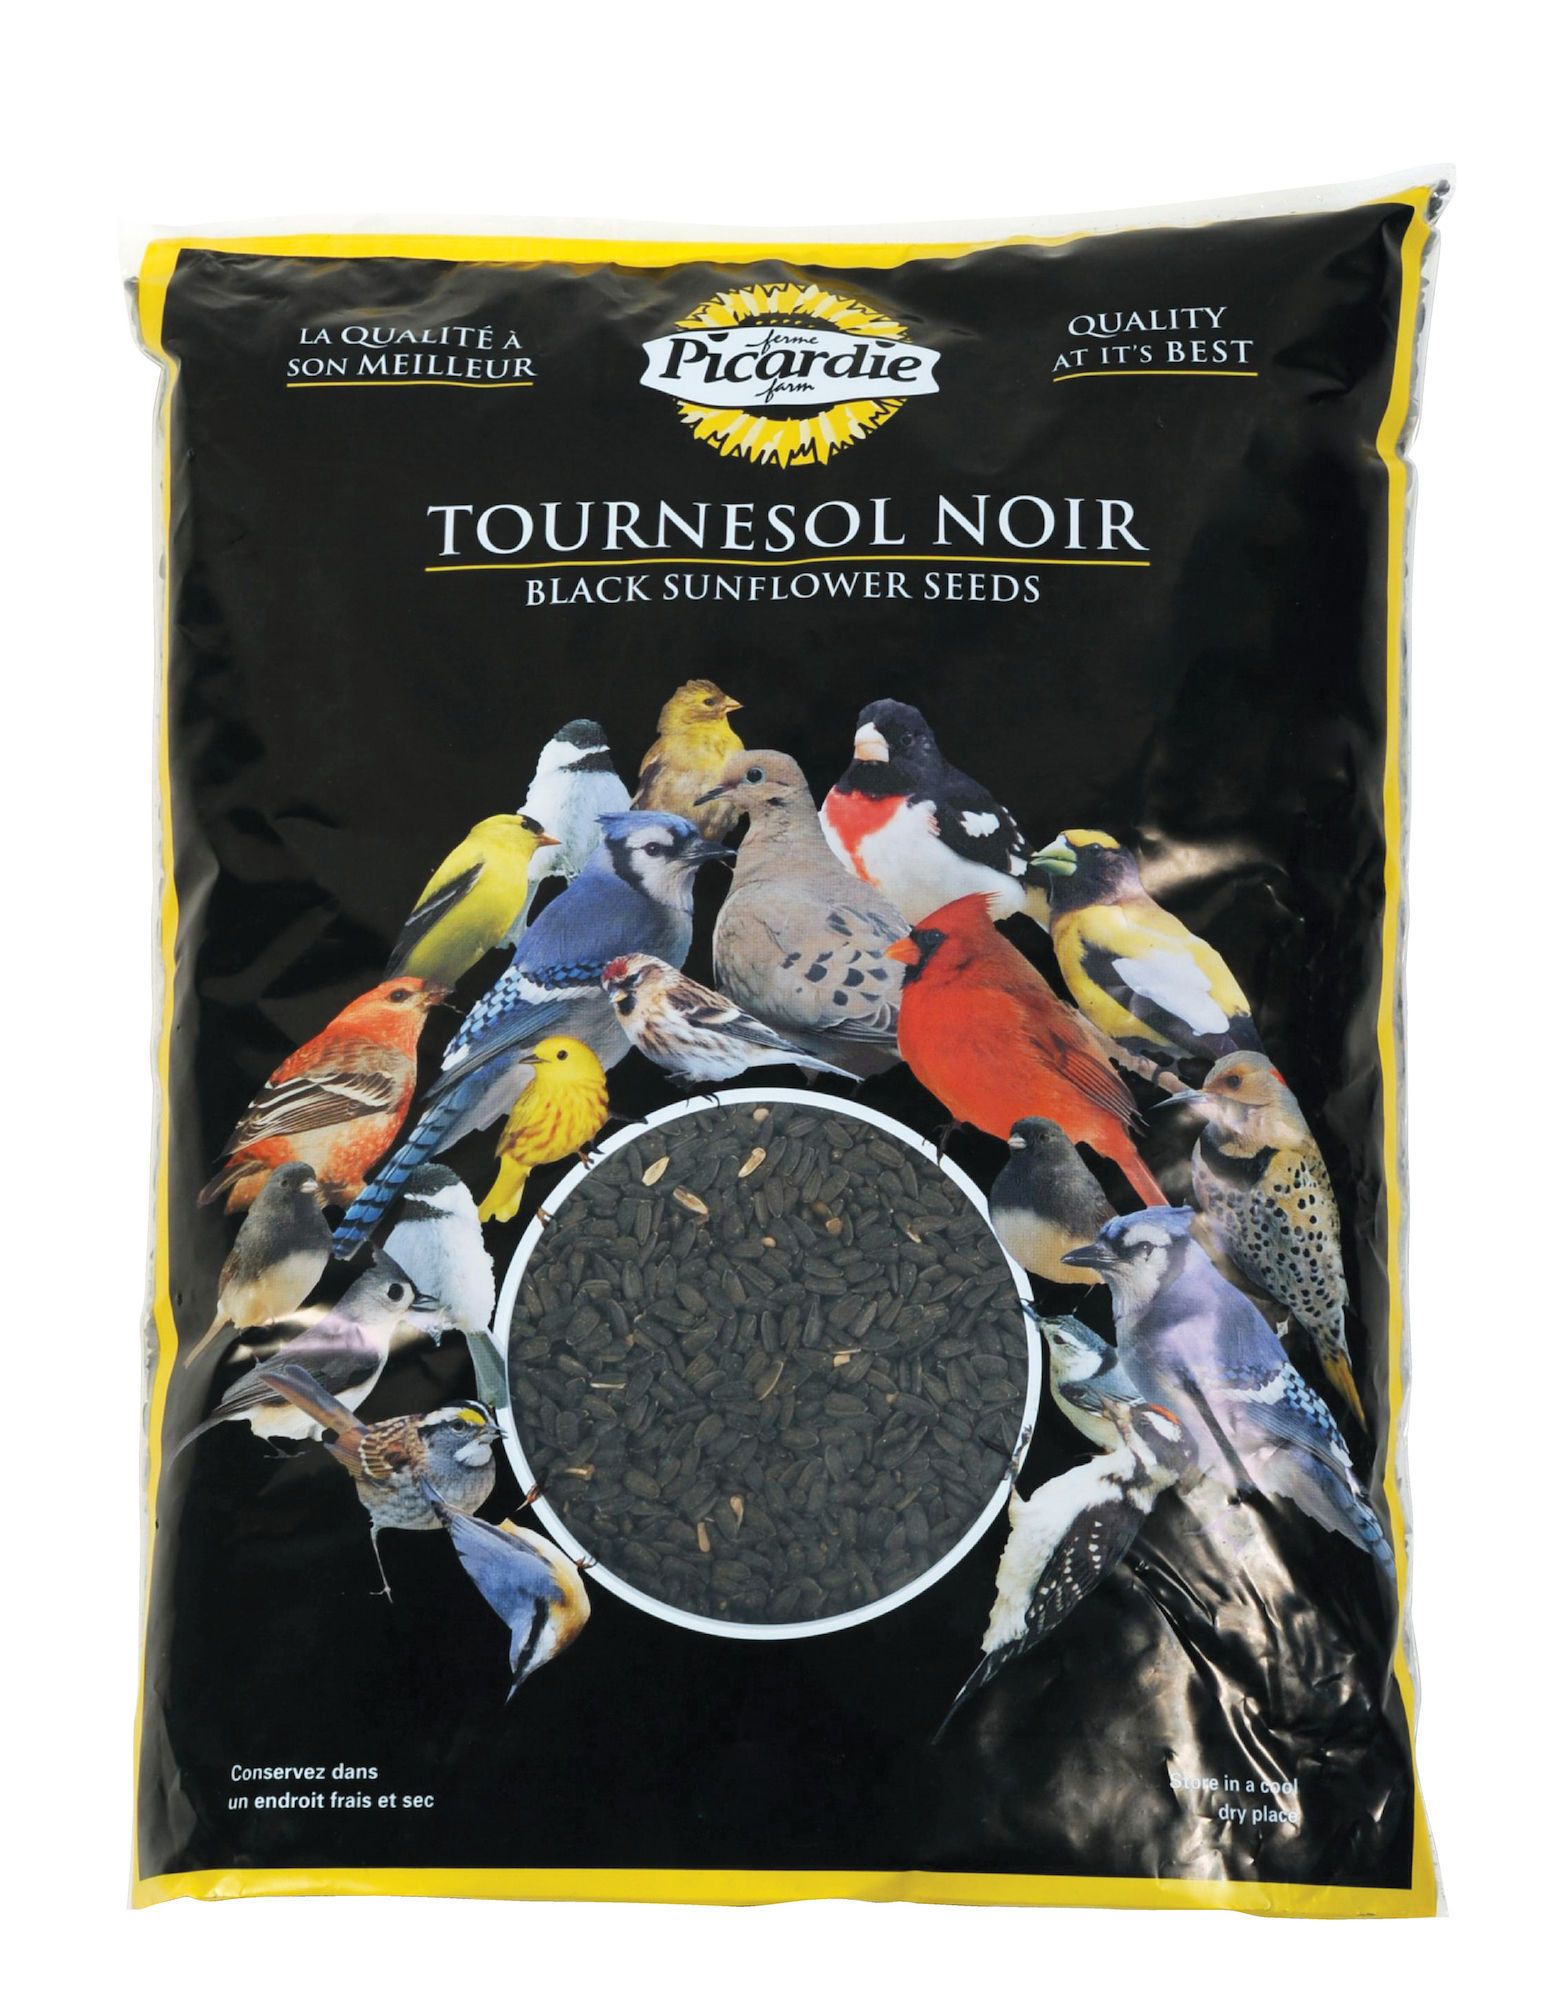 Tournesol noir micro 1kg - Manitoba